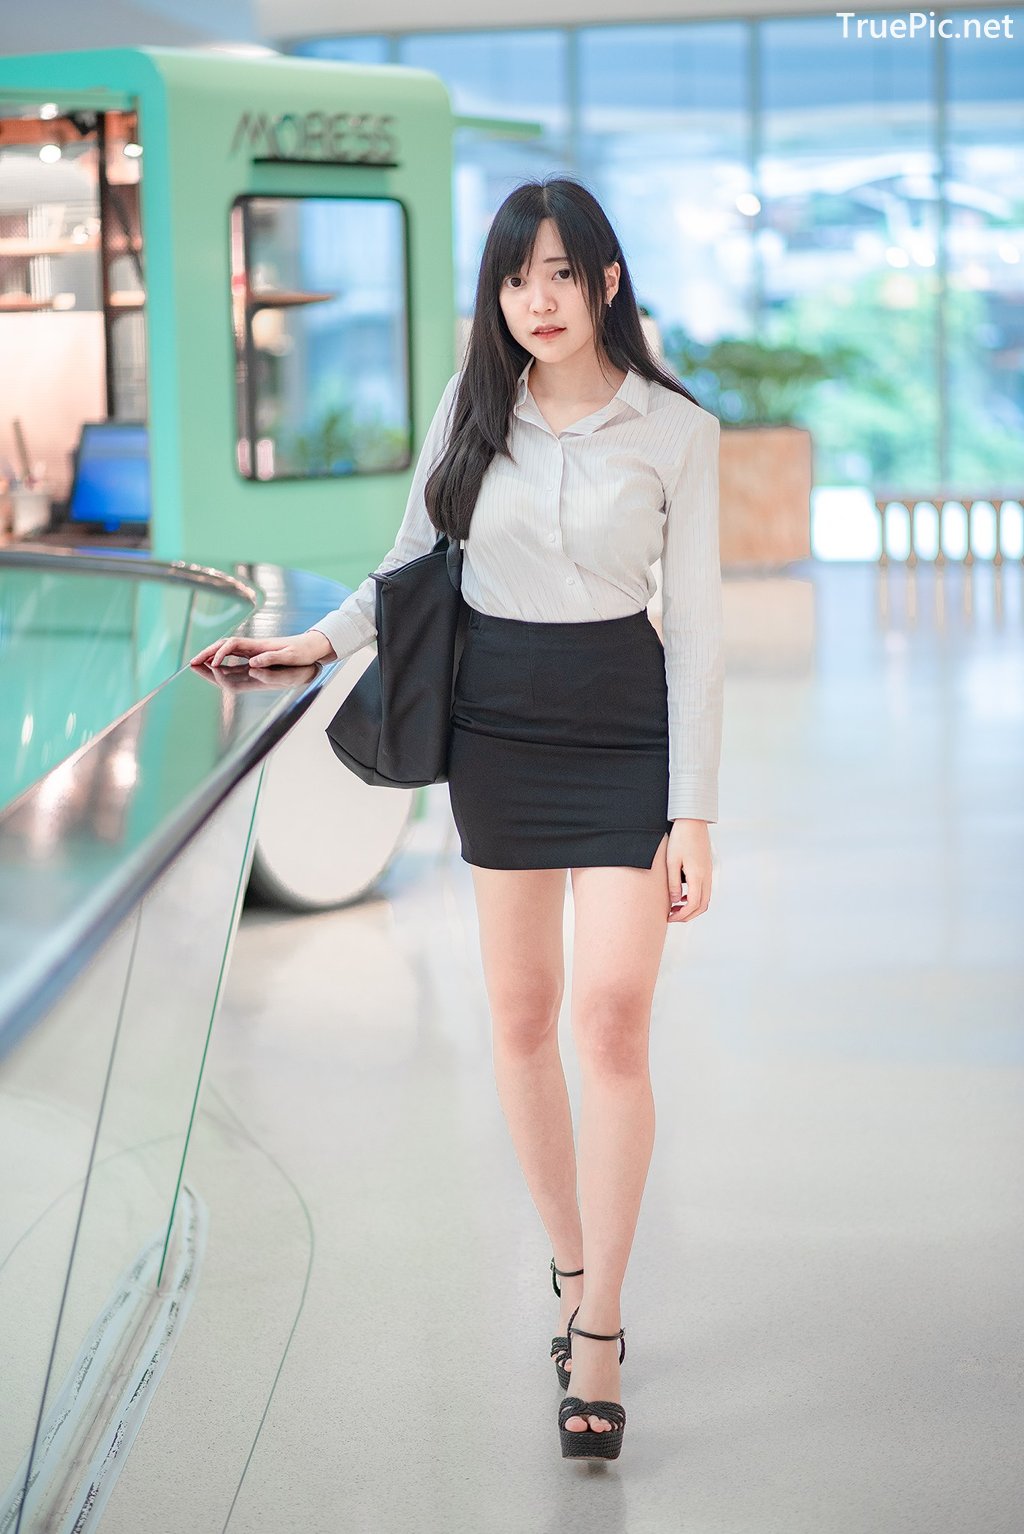 Thailand Model - Sarunrat Baifern Ong - Concept Kim’s Secretary